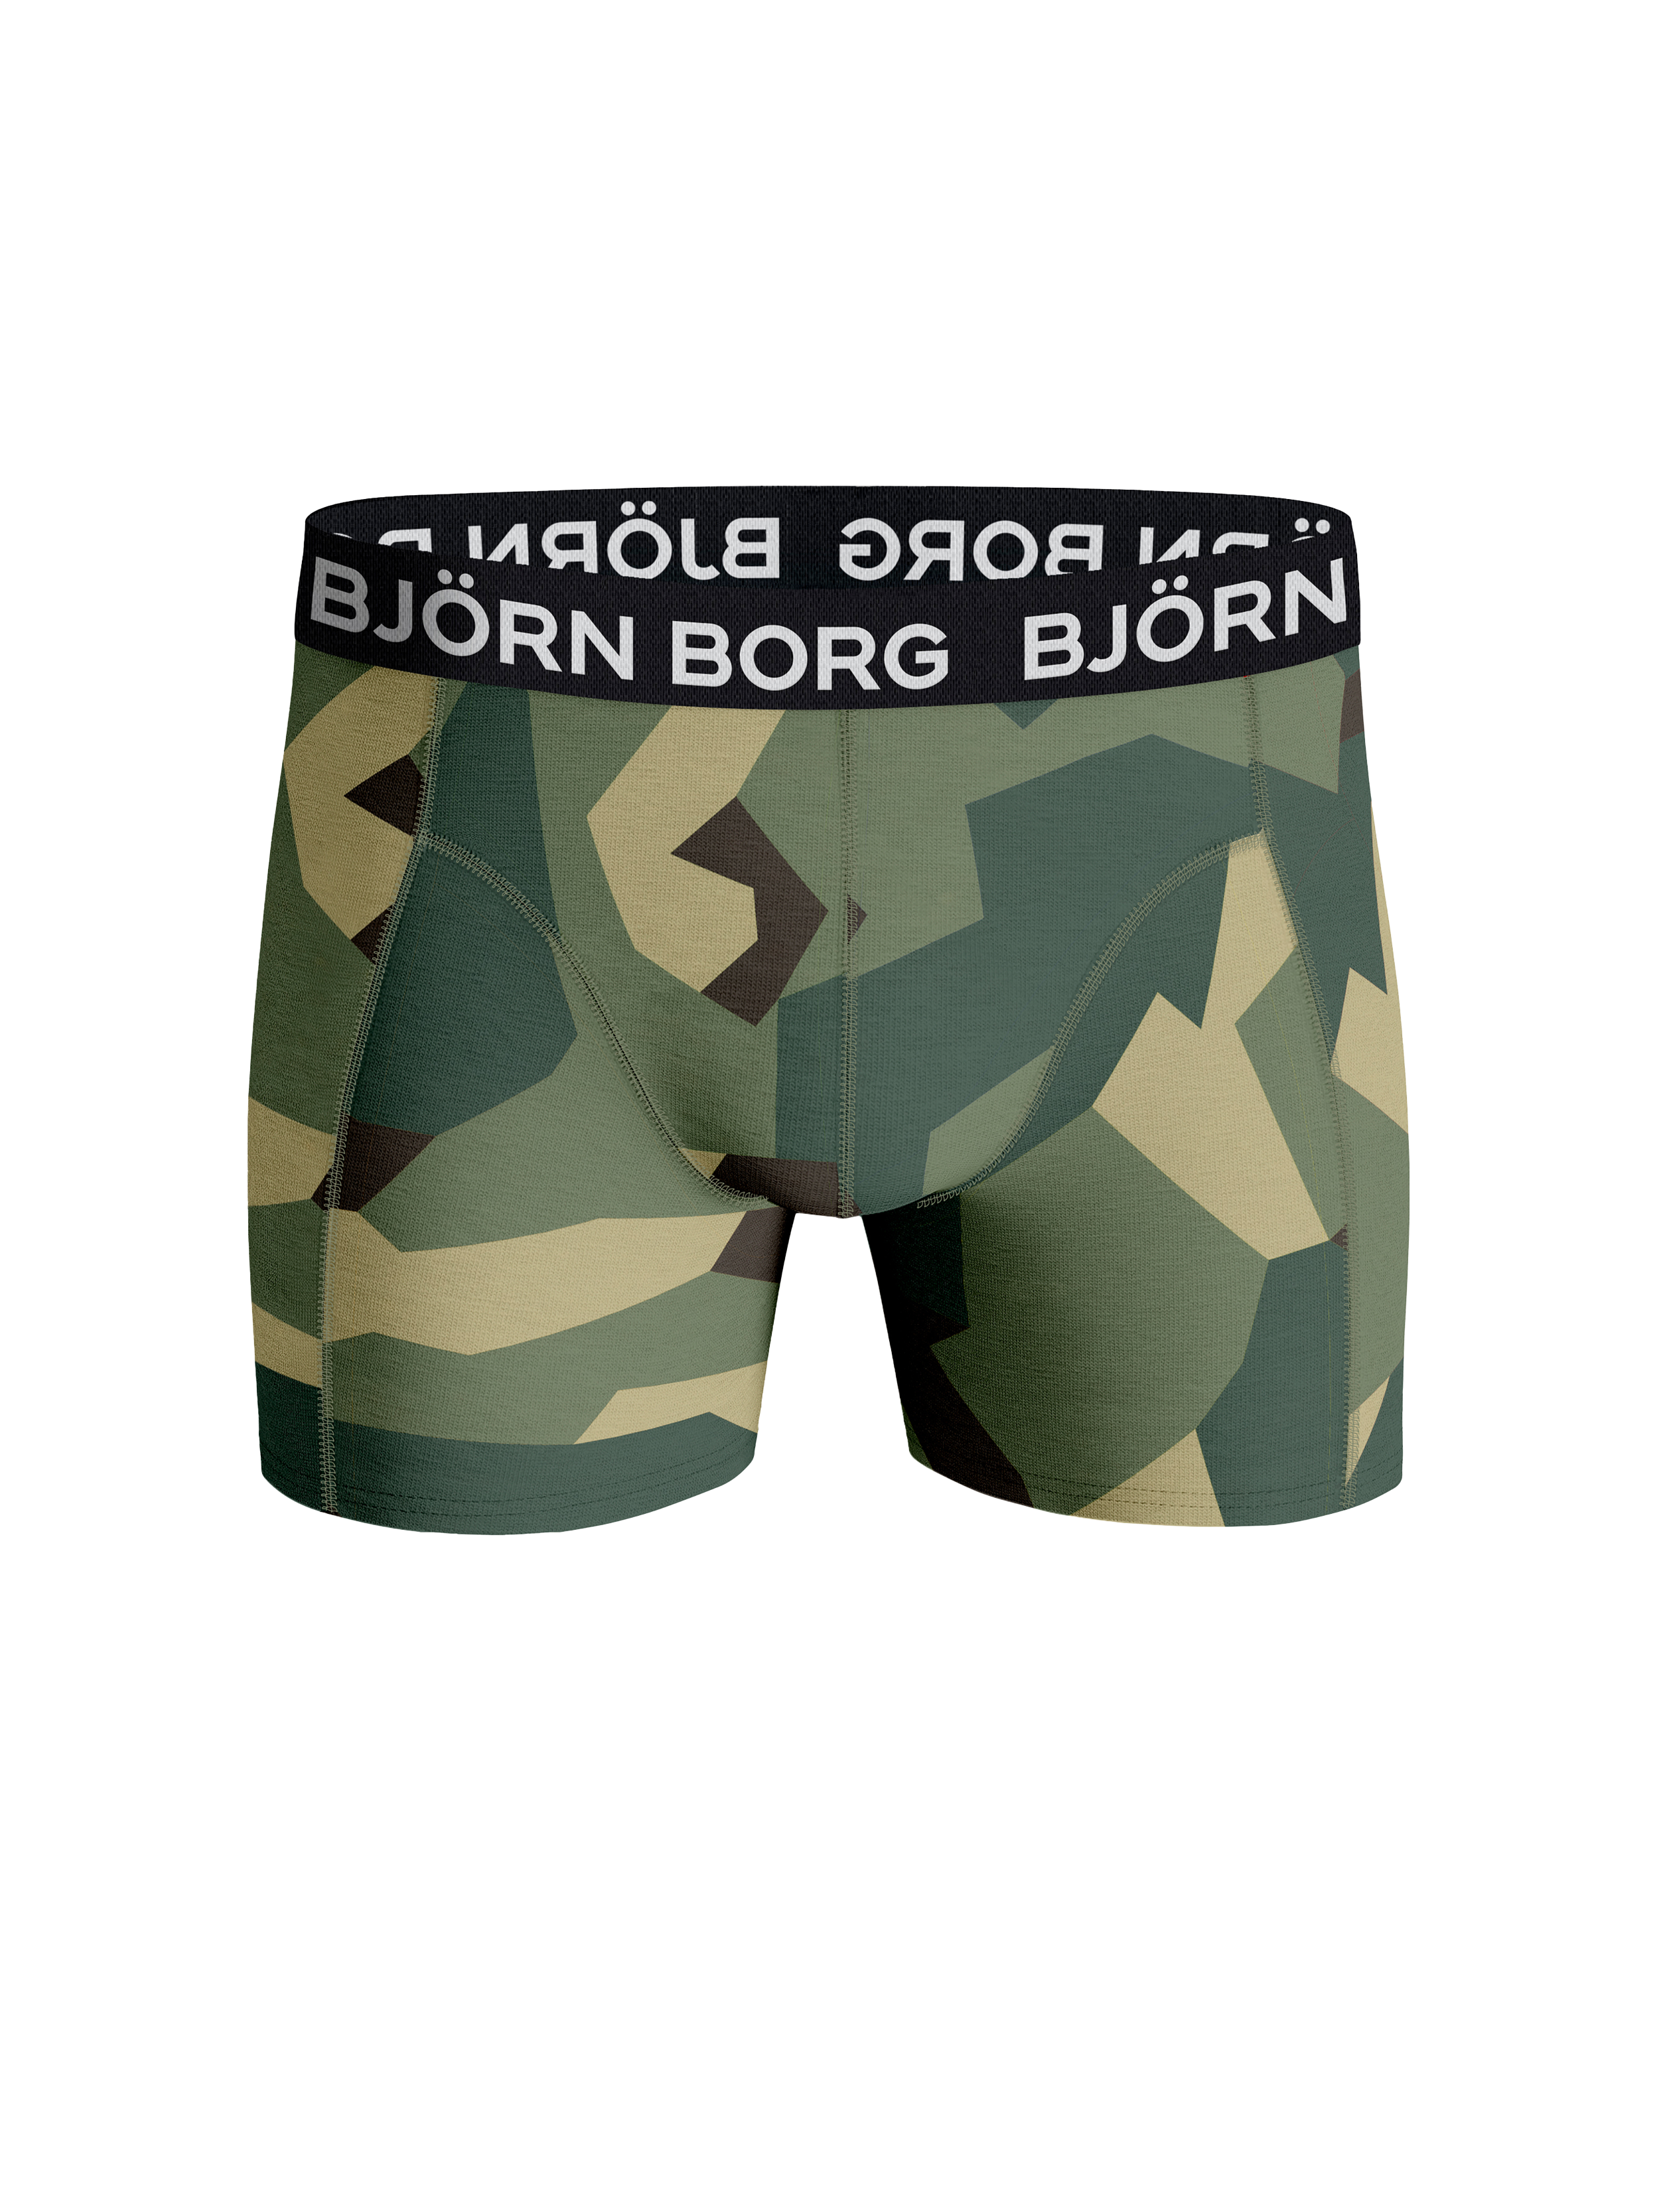 Bjorn Borg 2-Pack Side Logo & Swirls Boys Performance Boxer Briefs Blue